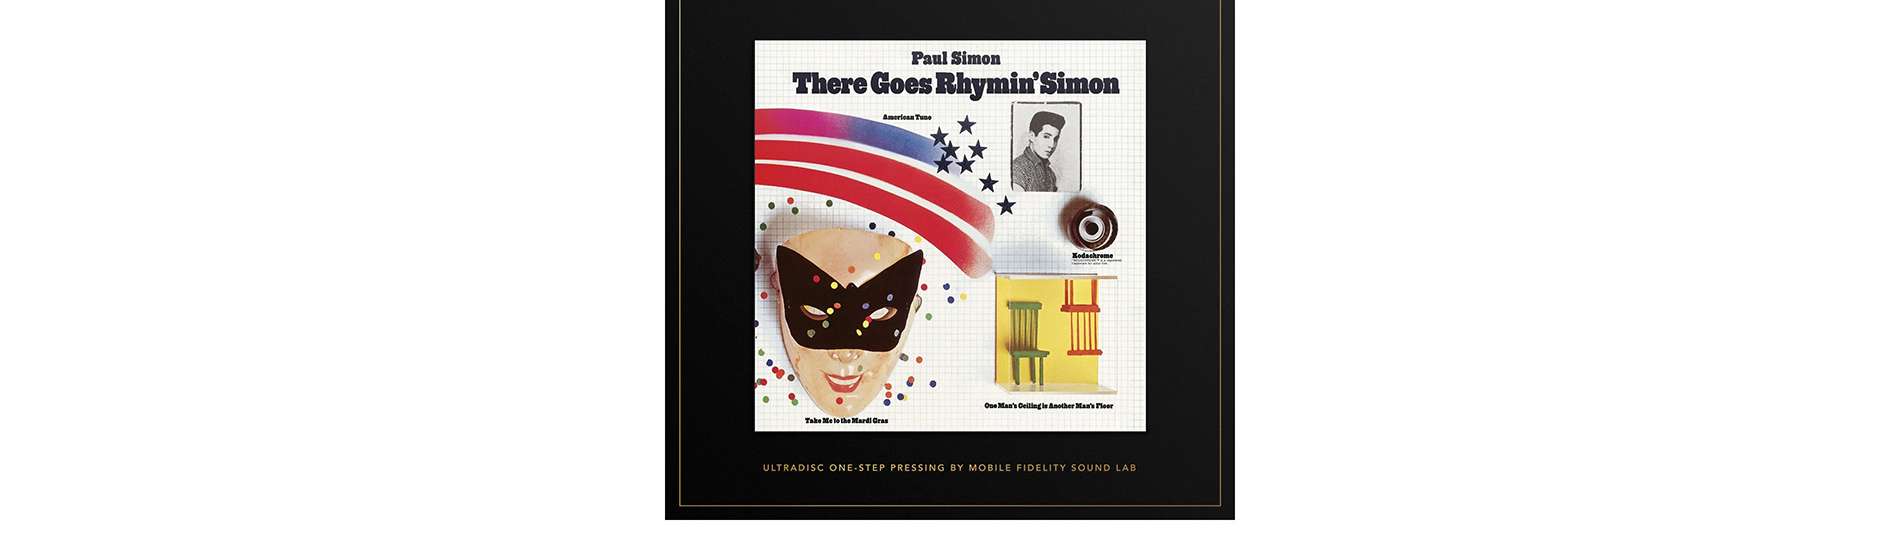 Paul Simon There Goes Rhymin' Simon MoFi Vinyl